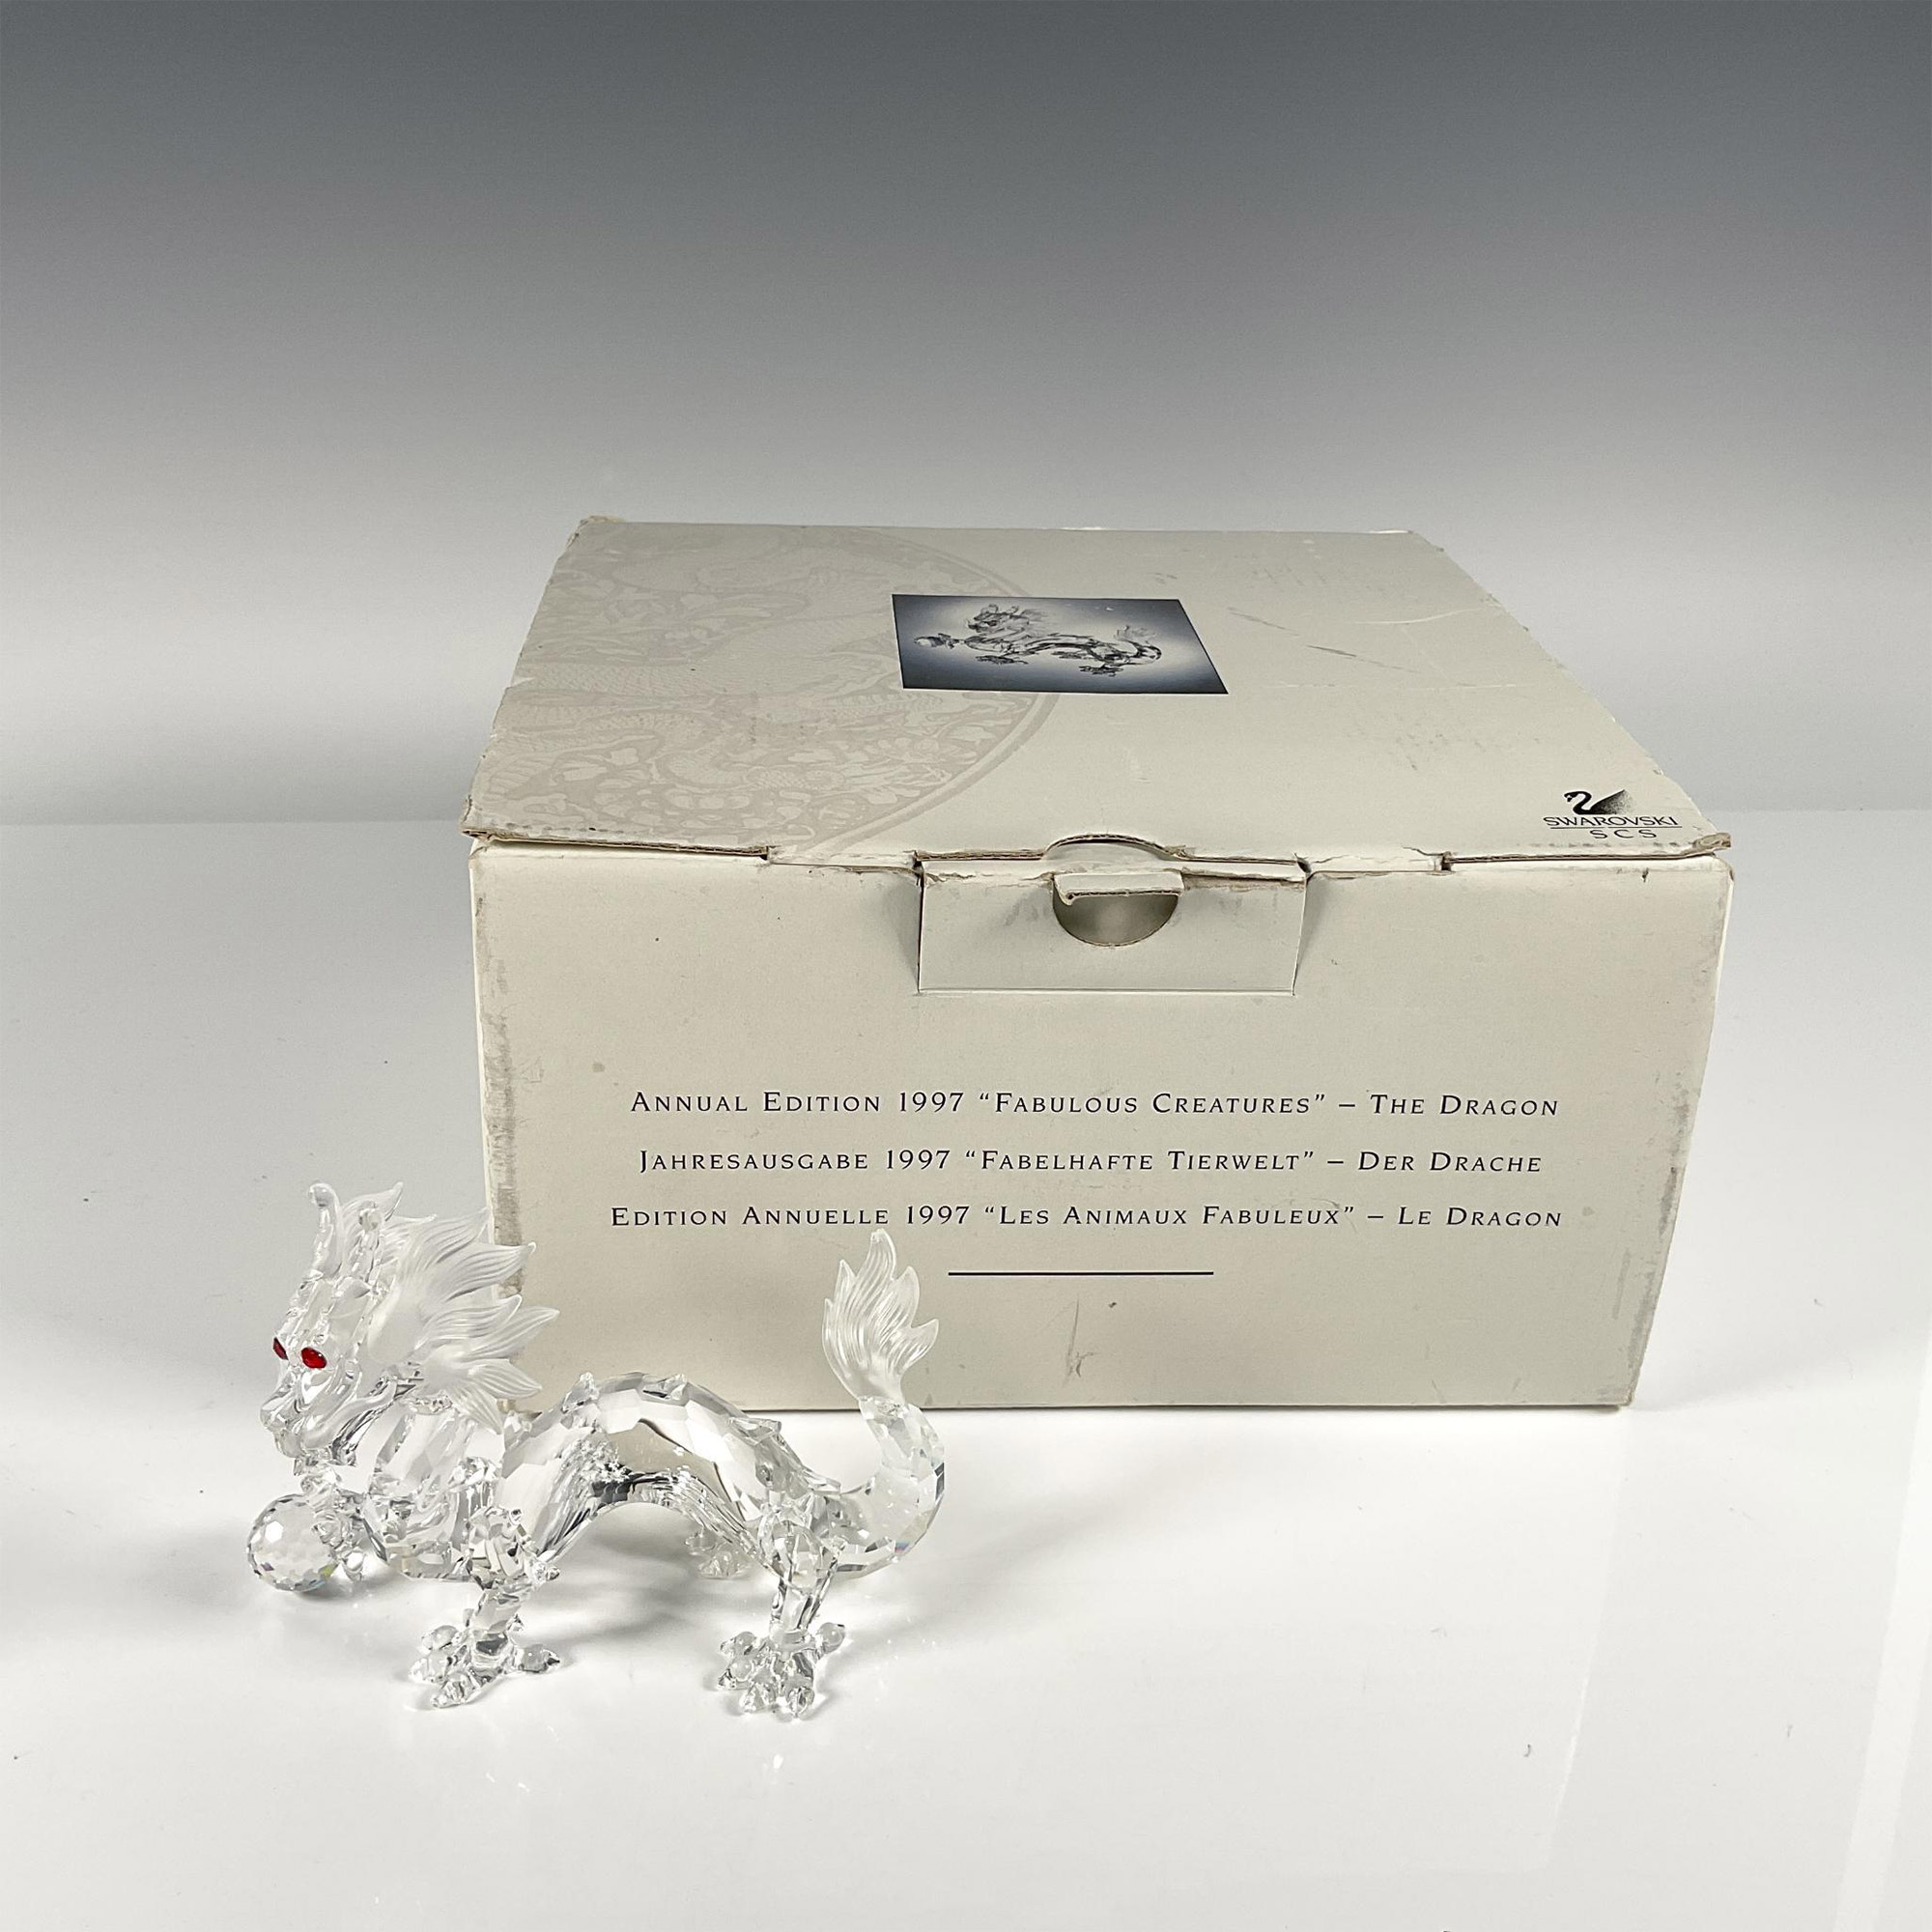 Swarovski Crystal Figurine, The Dragon - Image 4 of 4